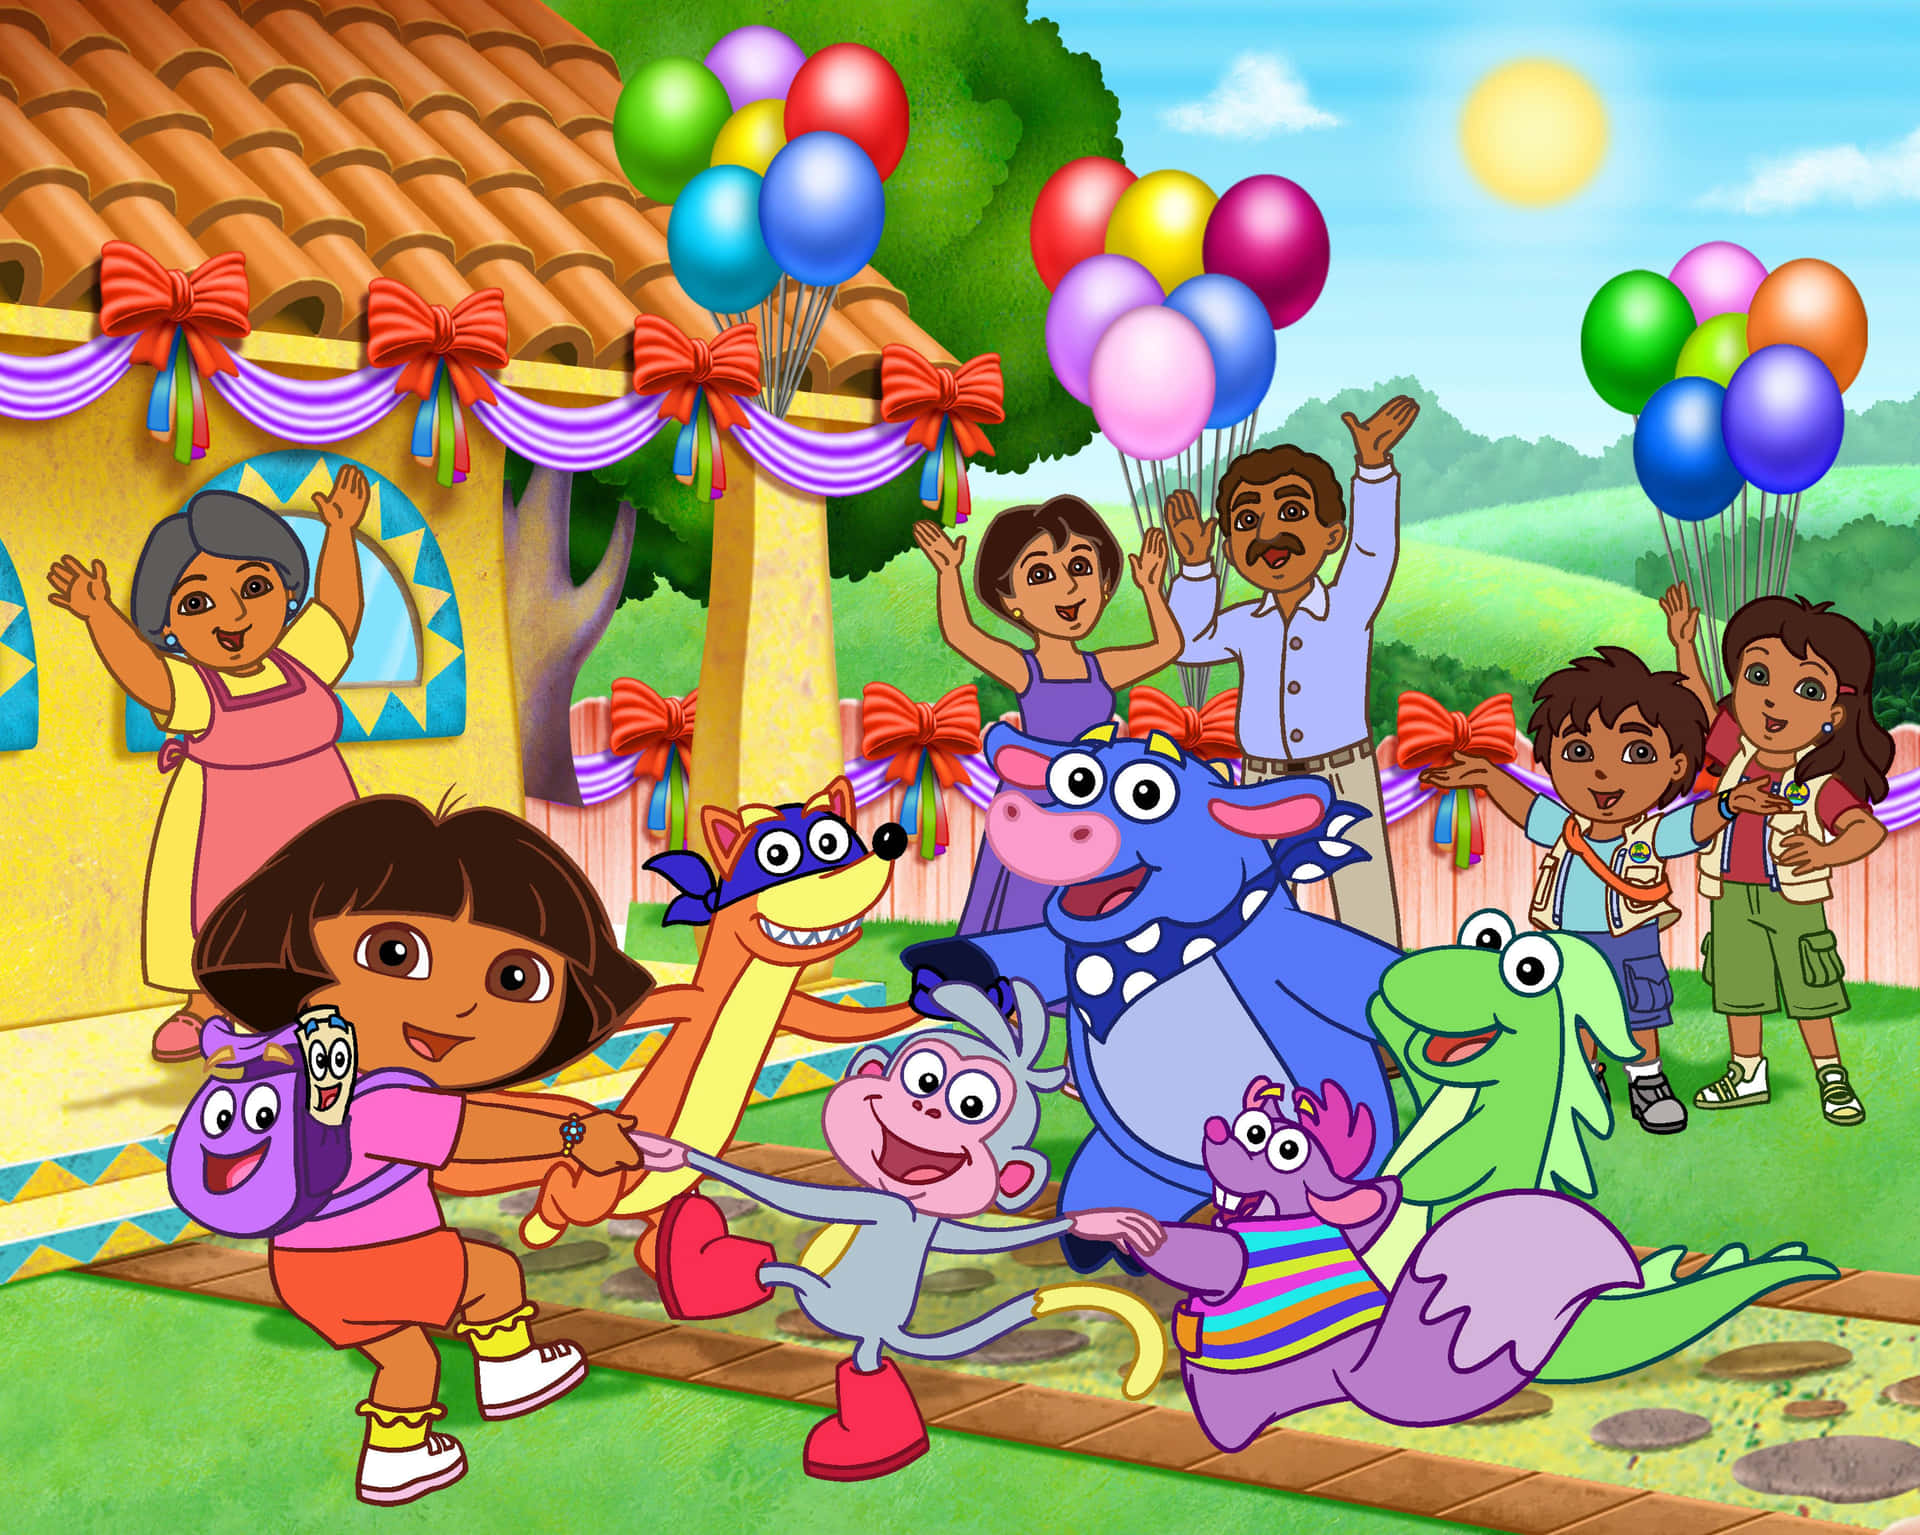 "Explore With Dora!"